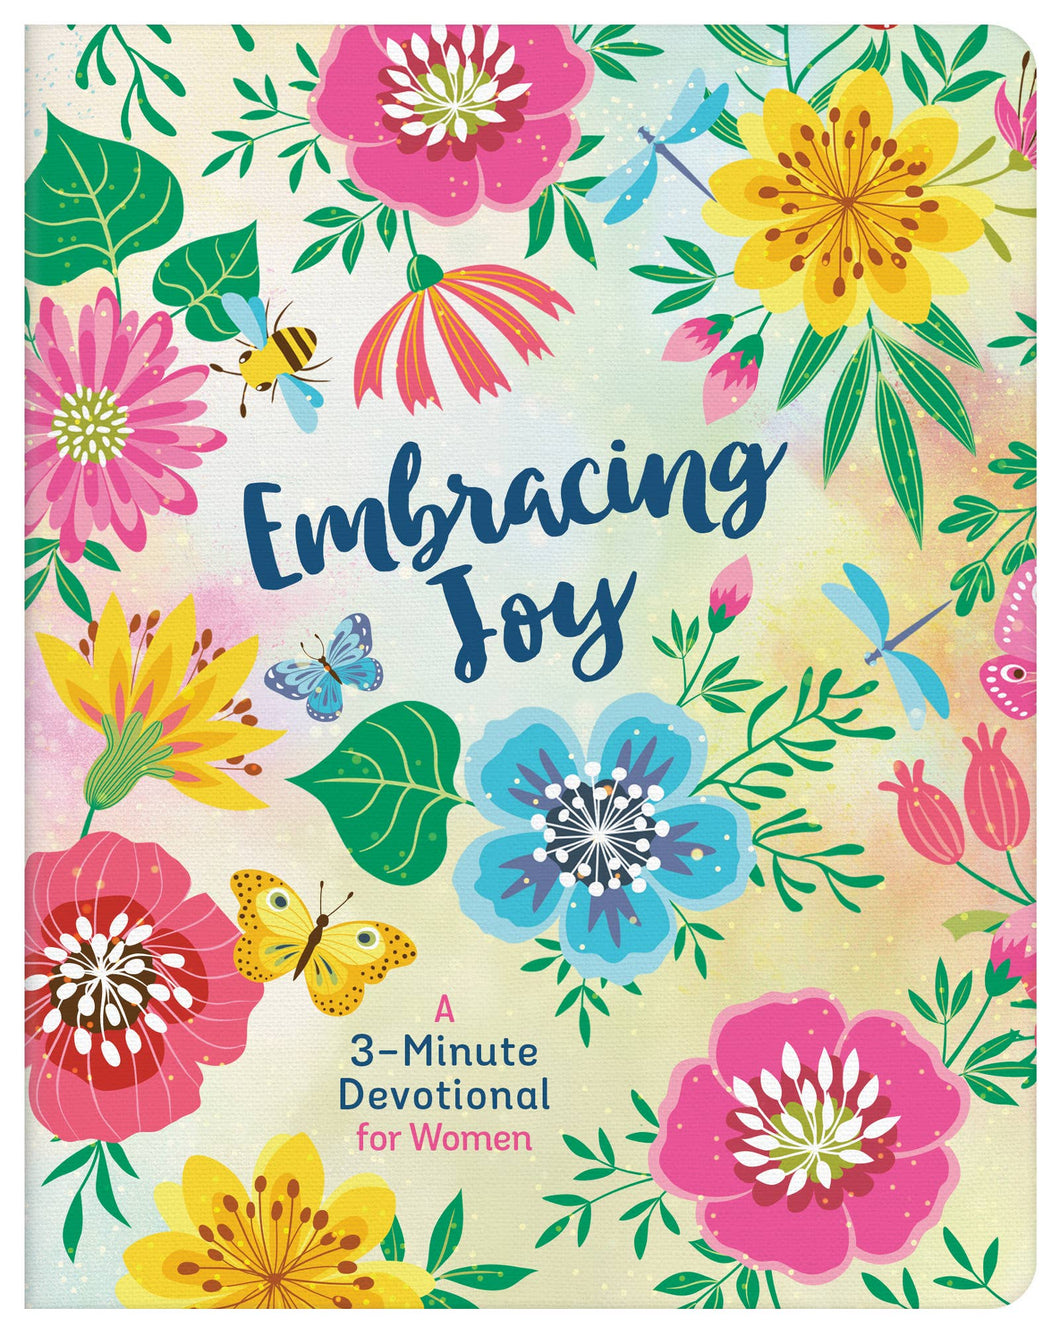 Book: Embracing Joy: A 3-Minute Devotional for Women